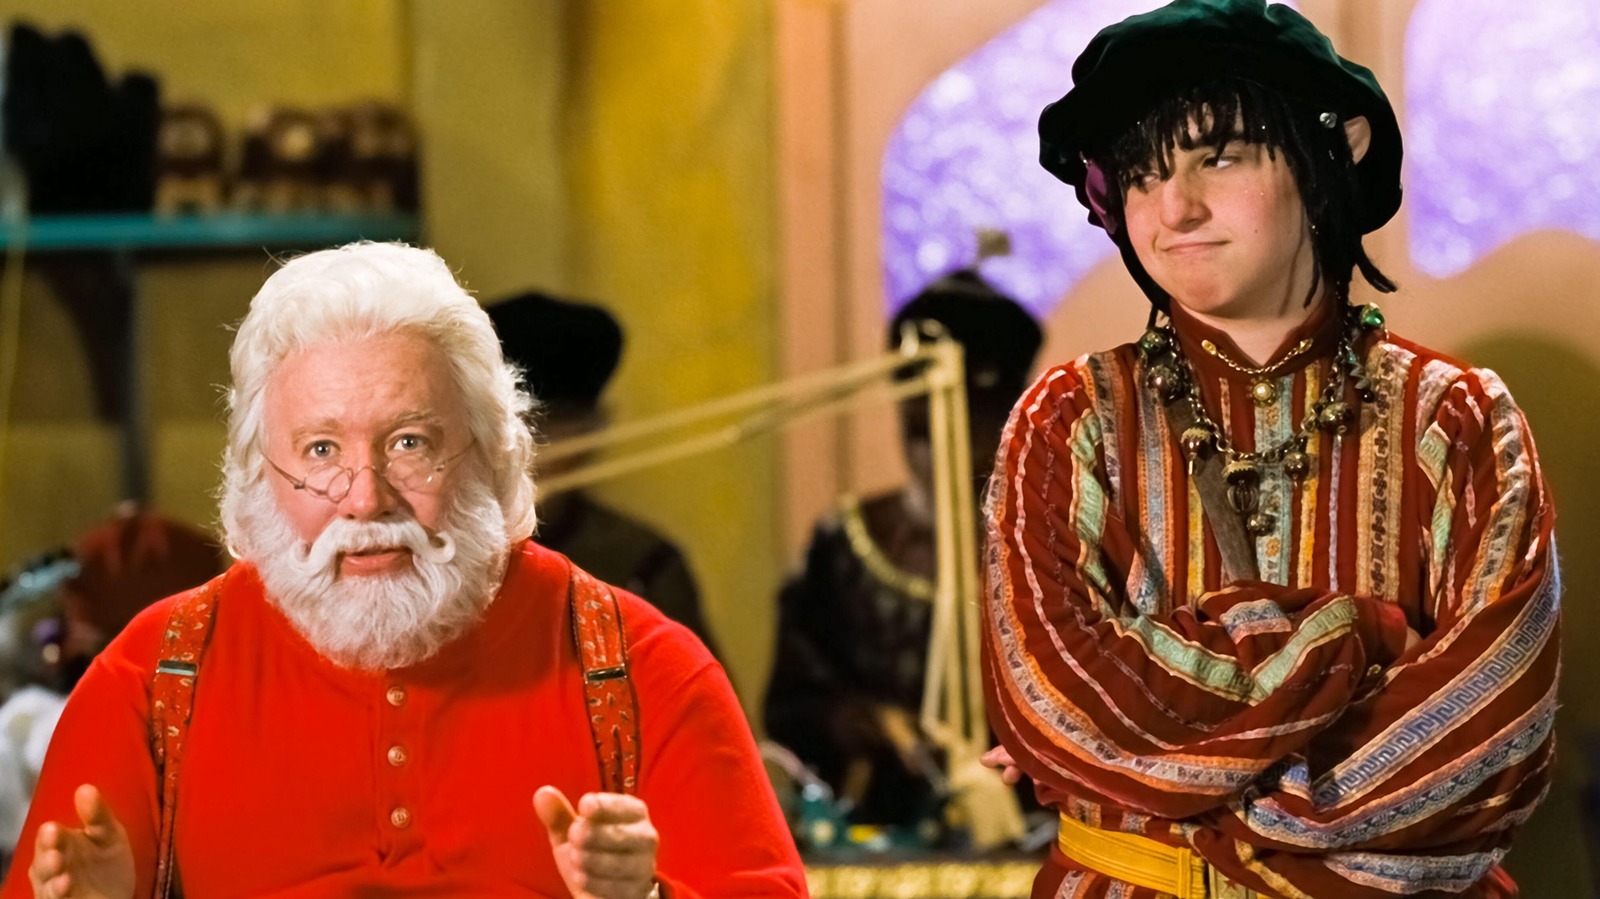 Disney+ Releases First Look at David Krumholtz Returning As Bernard in The New Santa Clause Movie